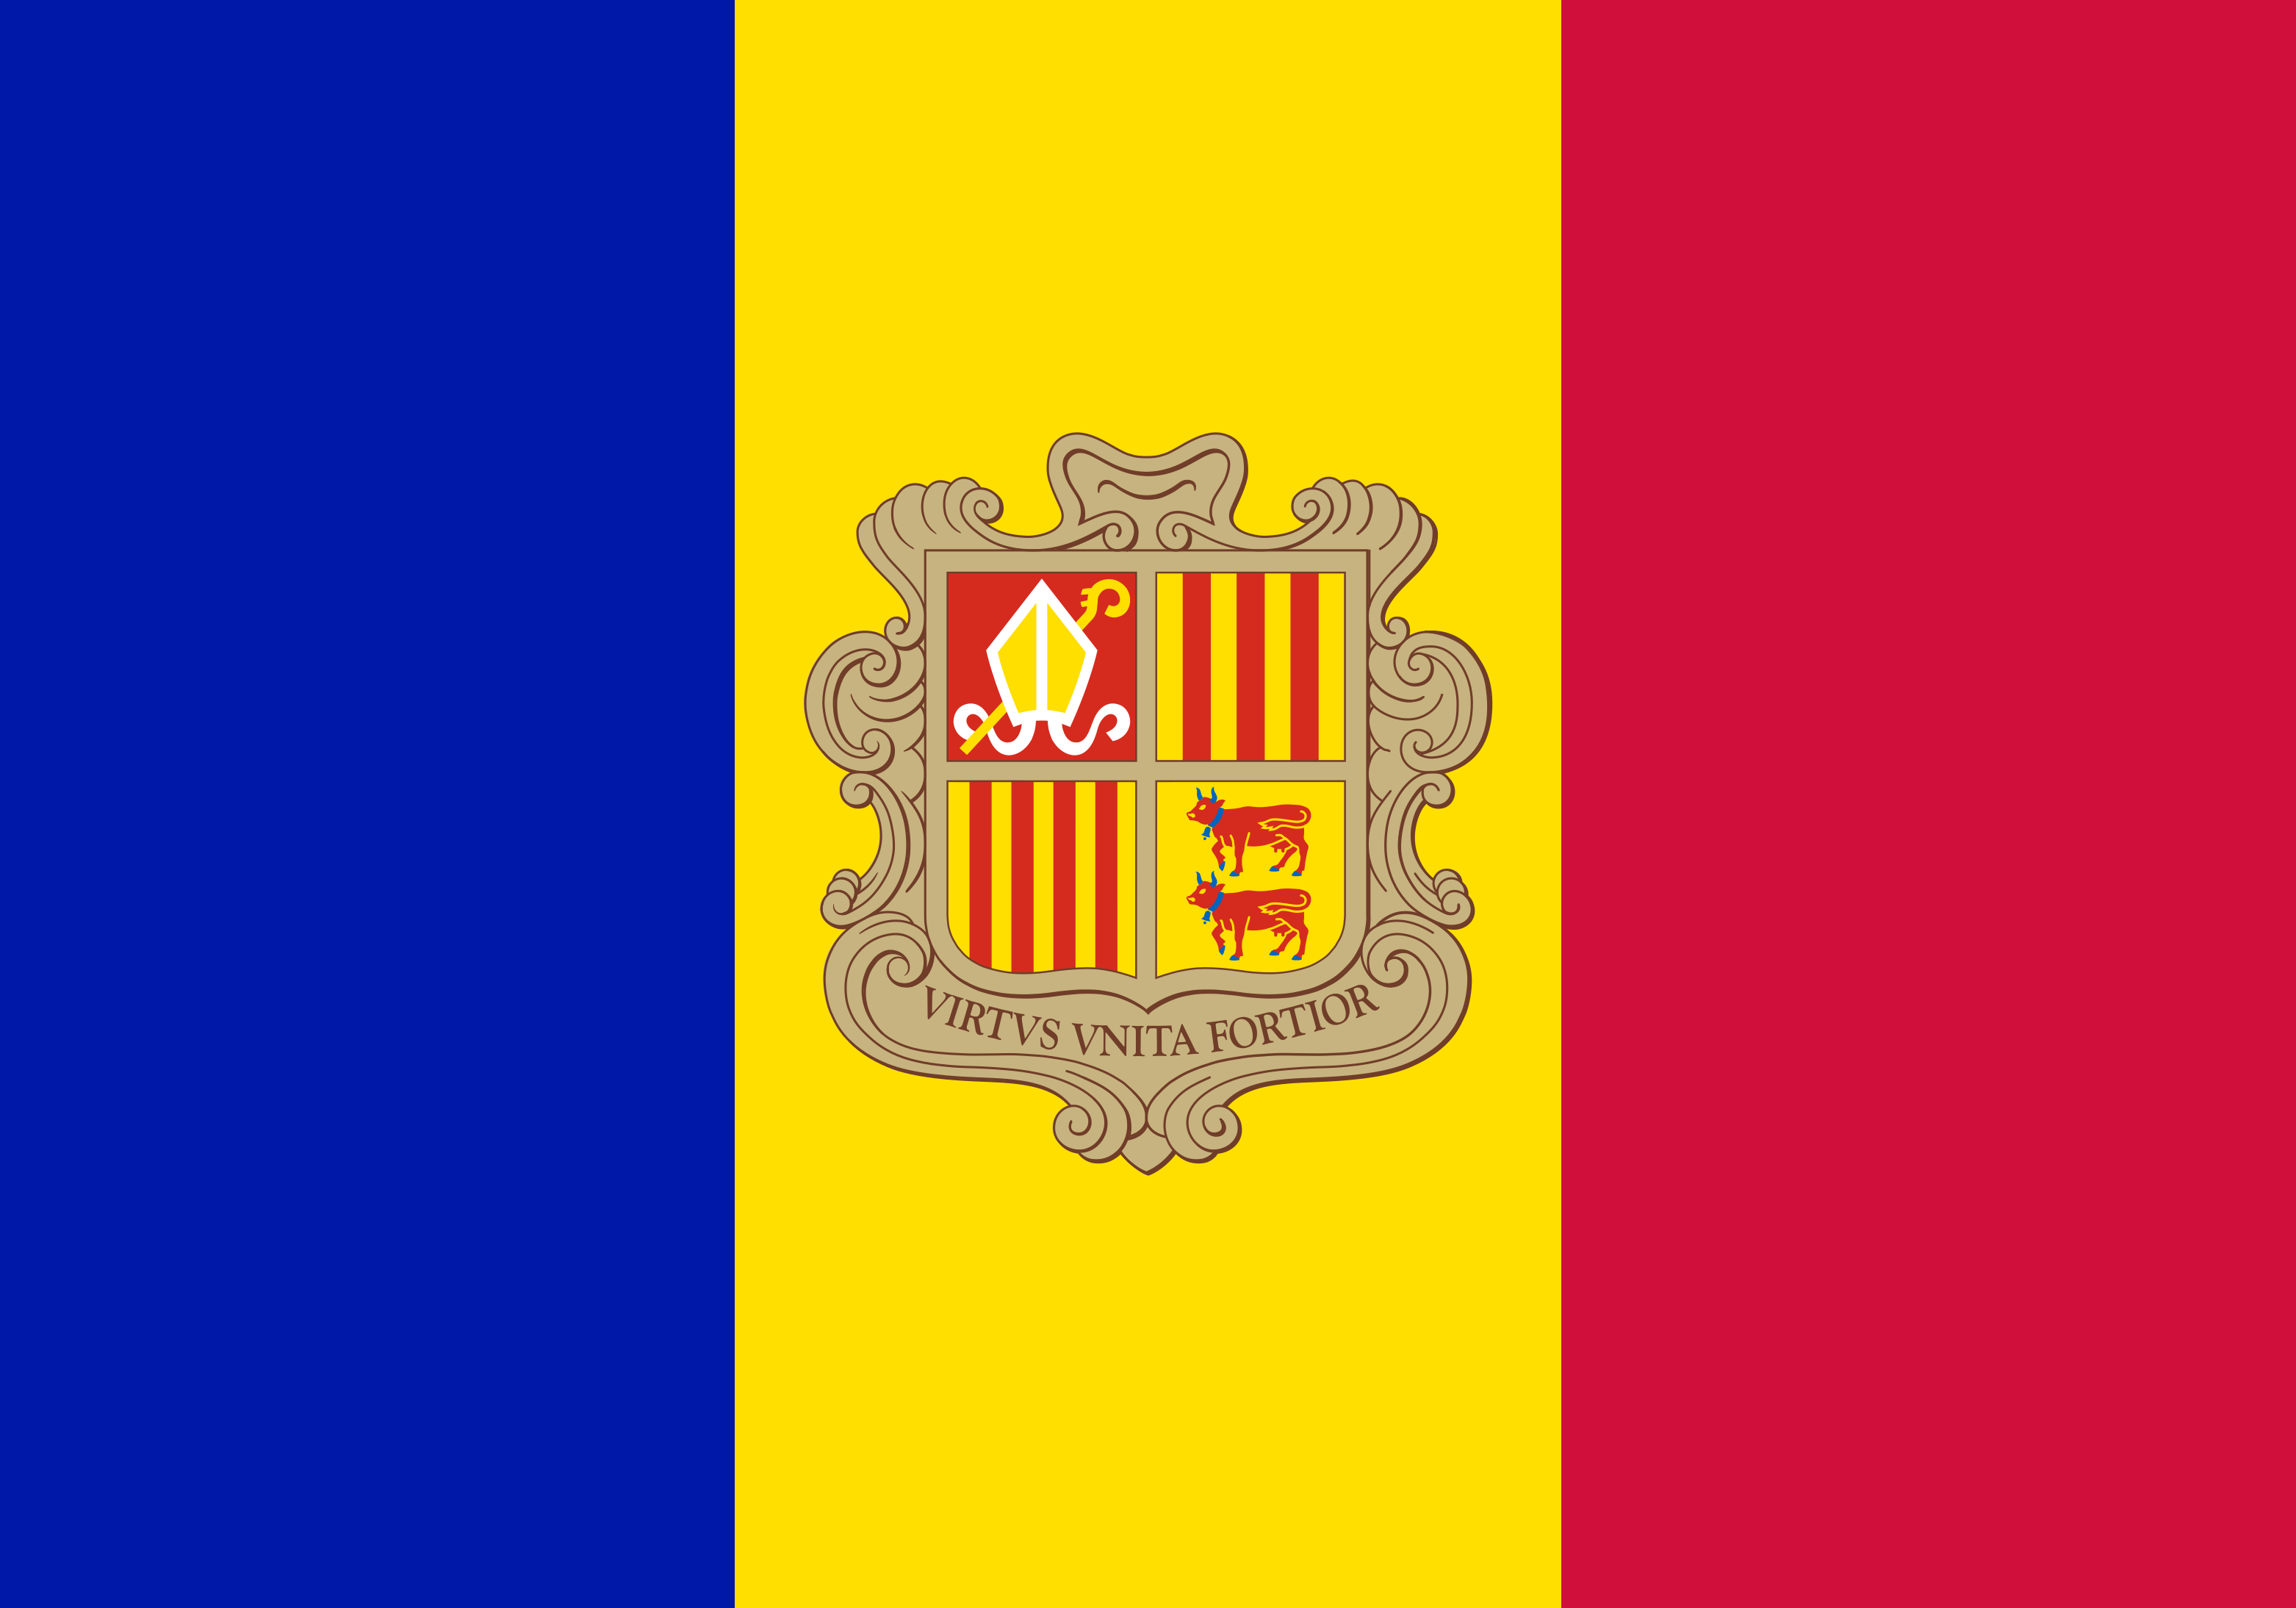 Free Andorra Flag Documents: PDF, DOC, DOCX, HTML & More!